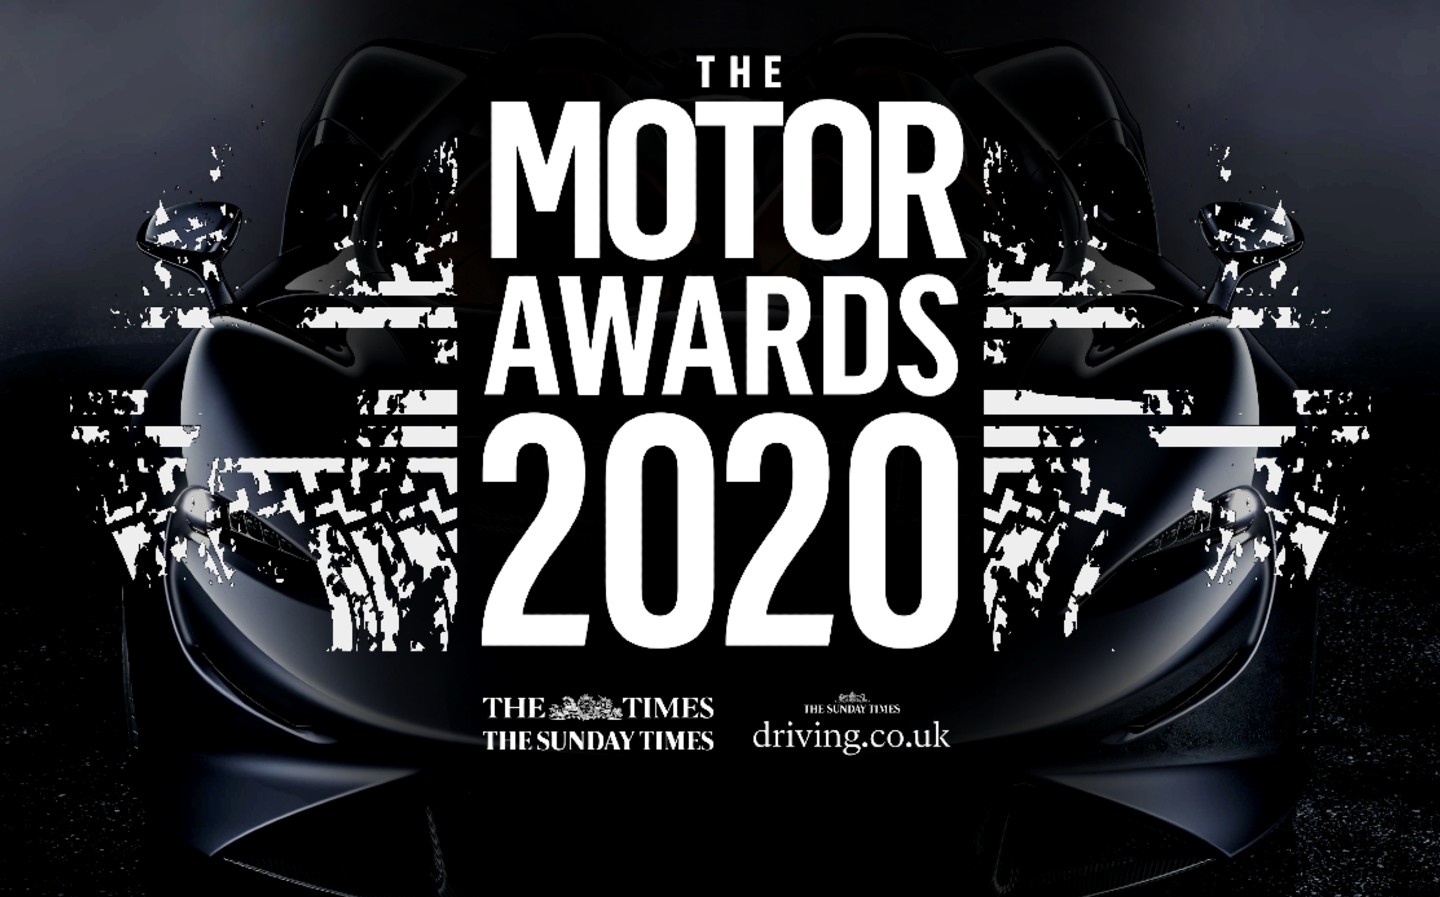 Motor Awards 2020 The winners